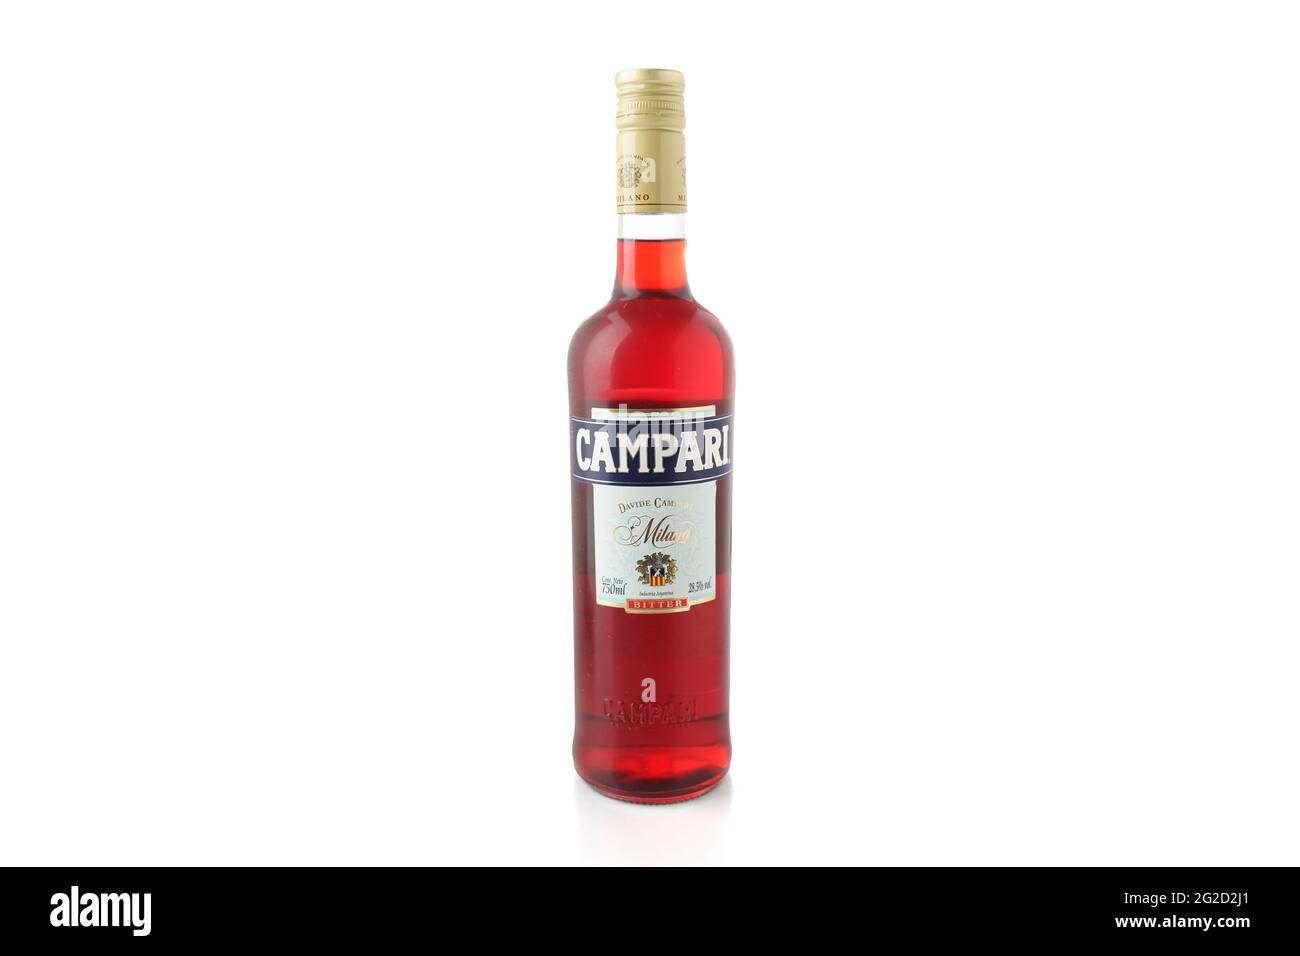 Campari bottle on white background. Italian aperitif. Alcoholic beverage Stock Photo